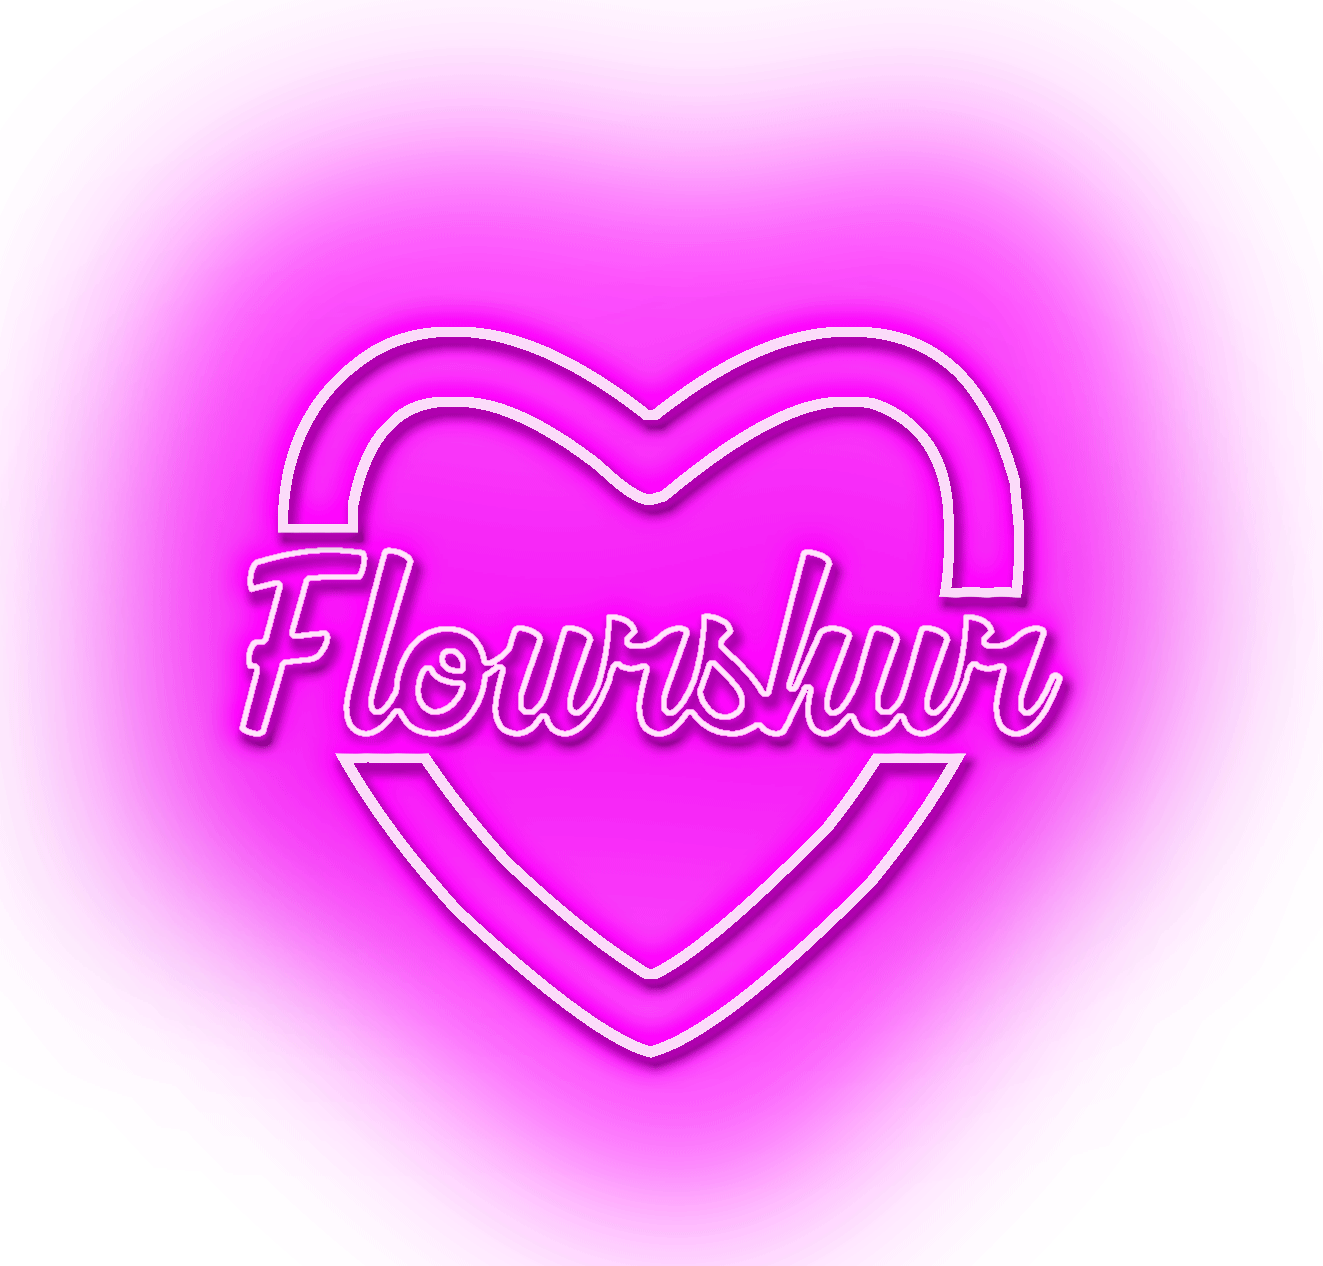 Flourshur